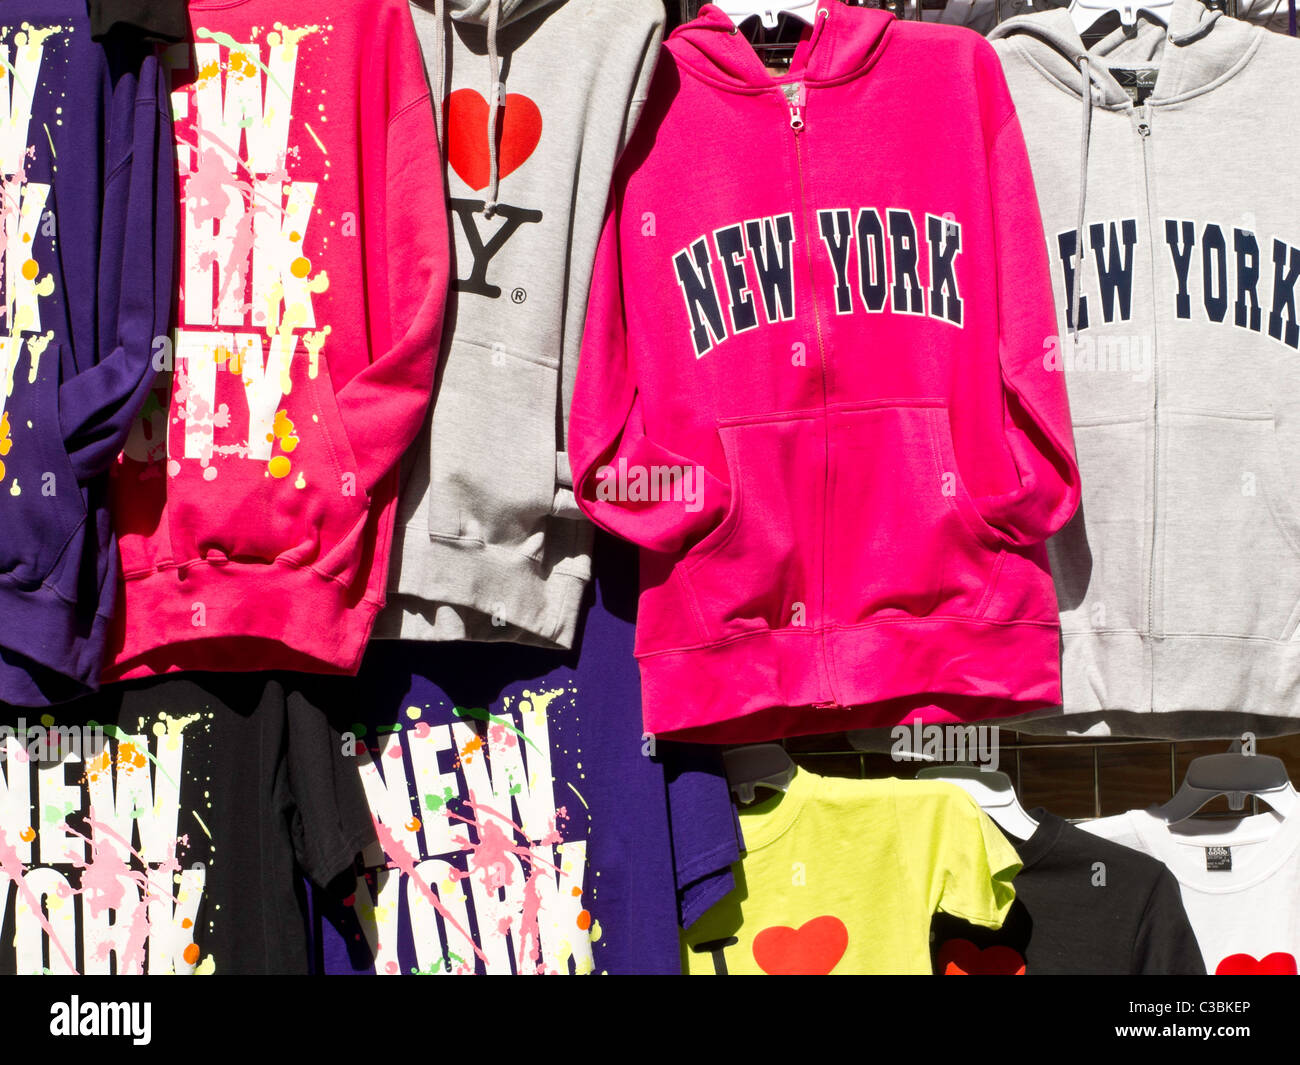 New York Branded Souvenir Clothing, Street Vendor, NYC Stock Photo - Alamy